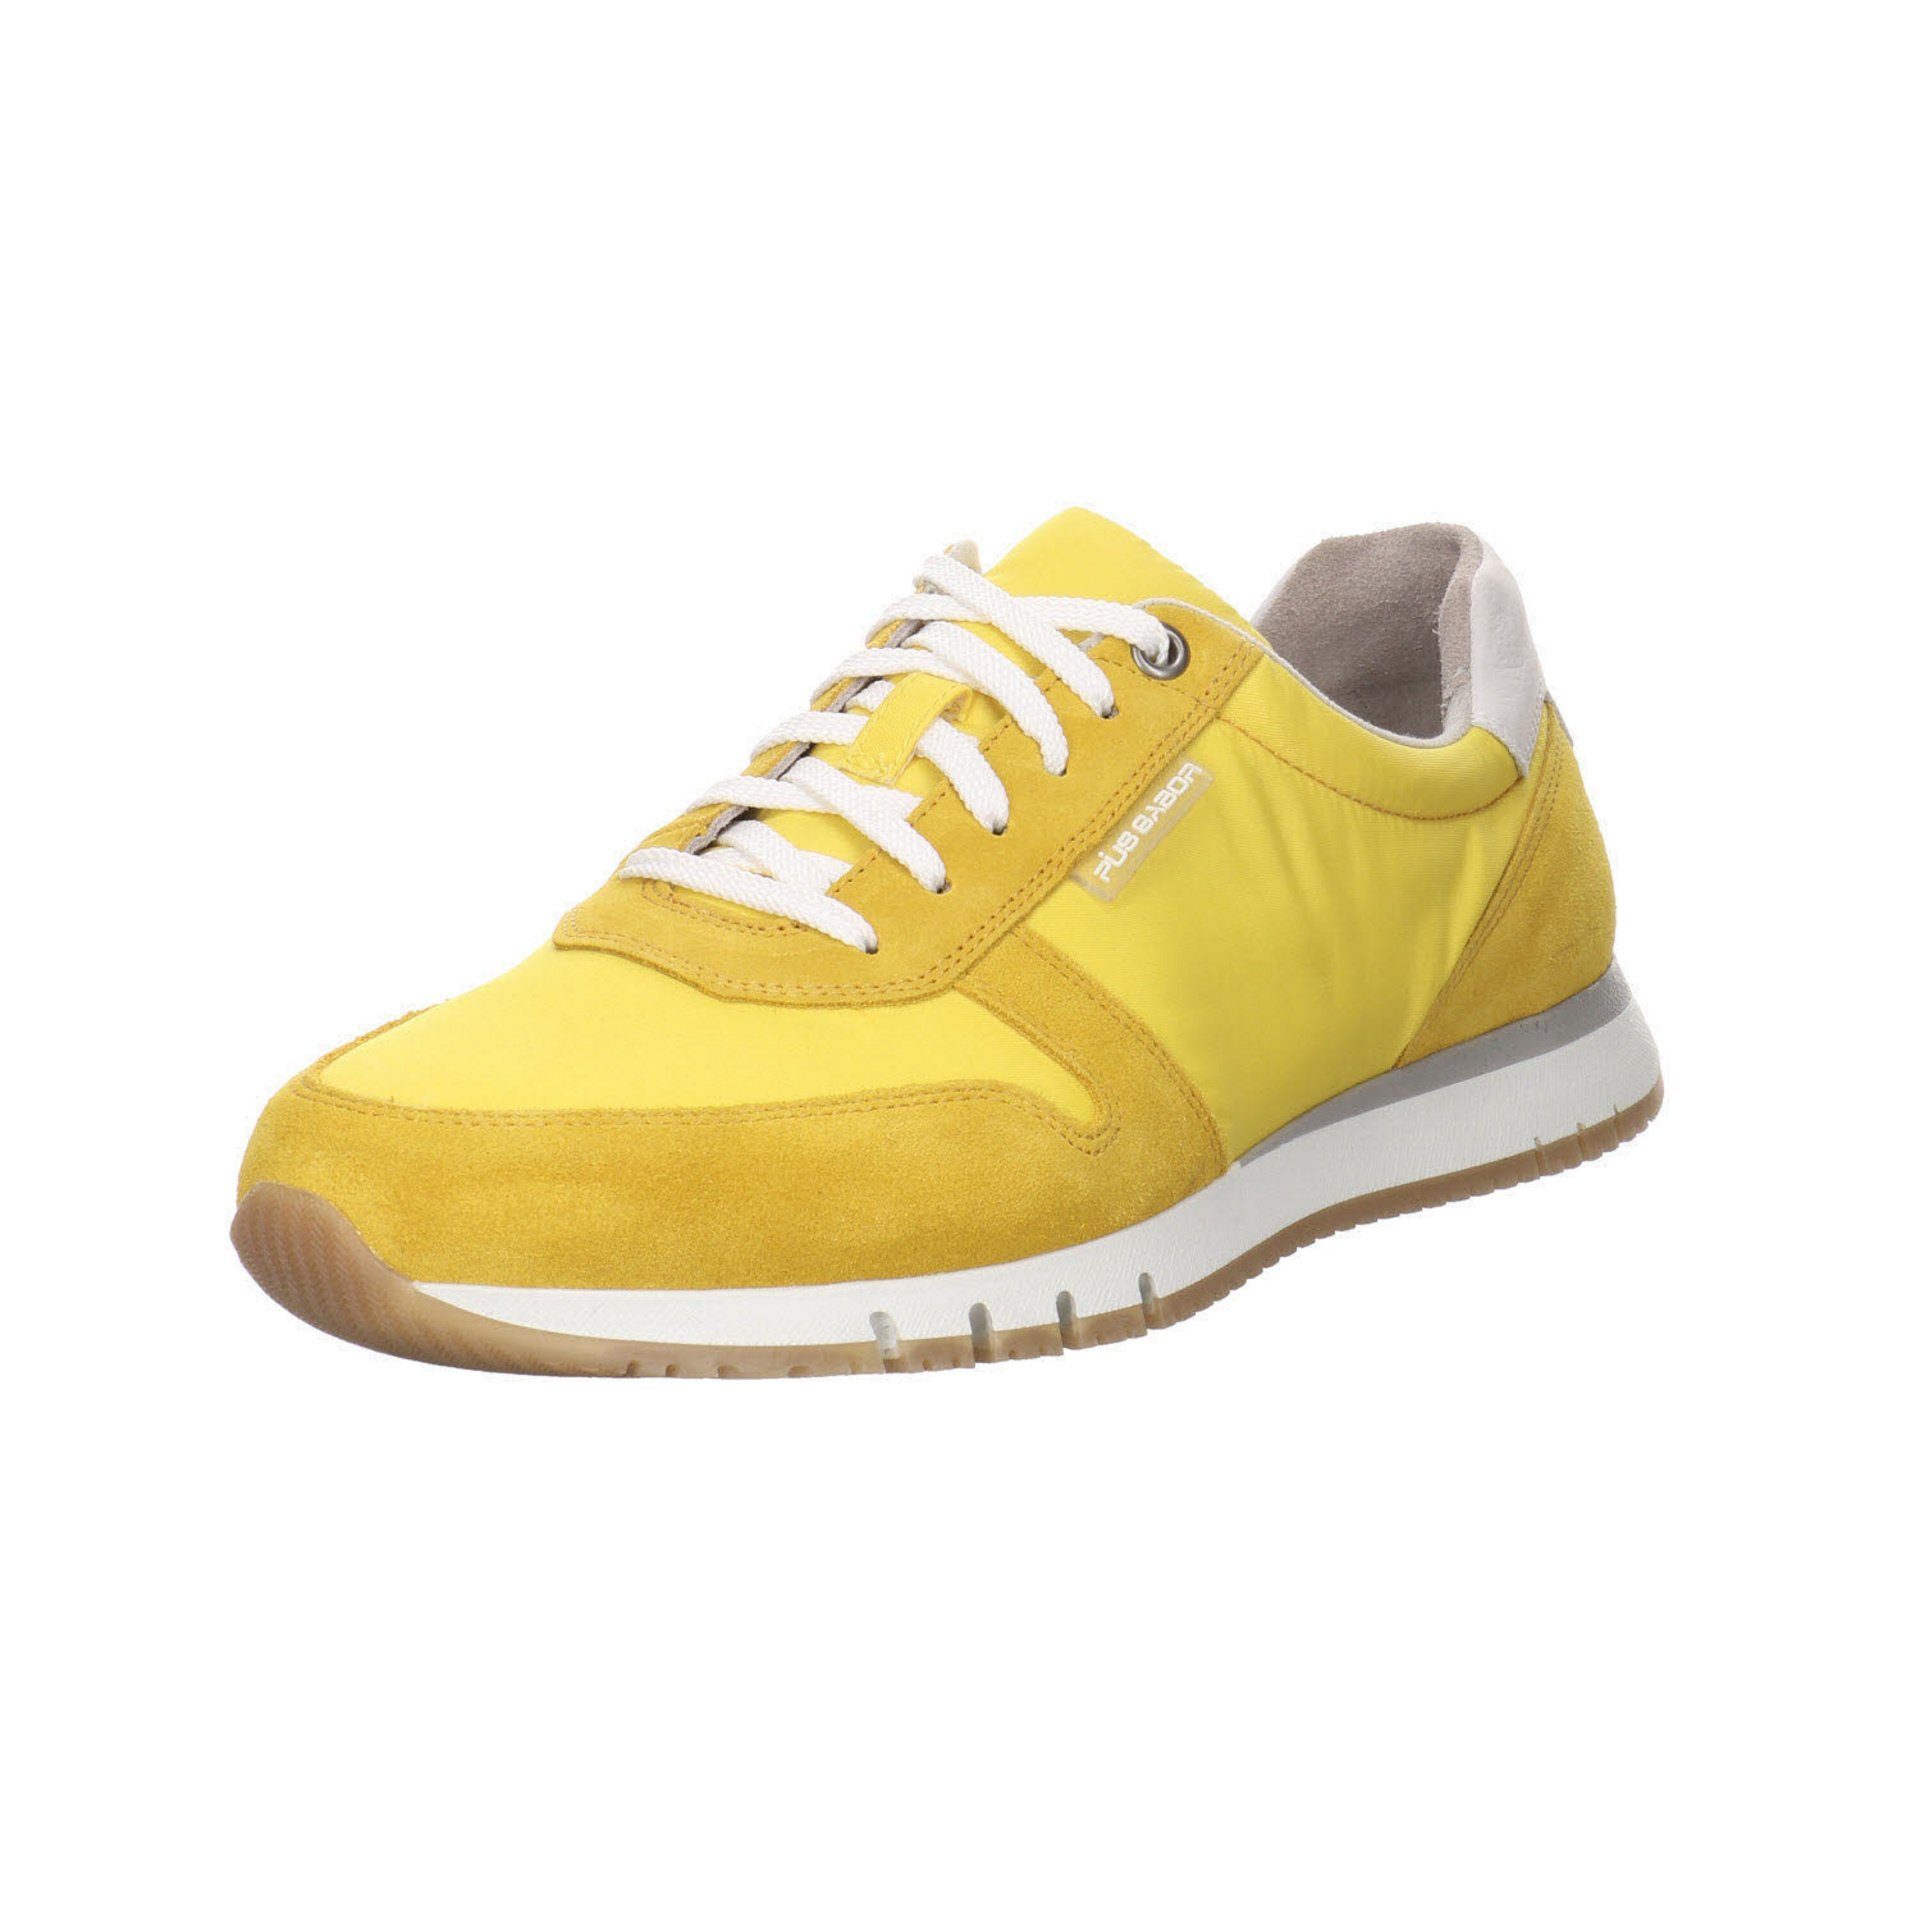 Pius Gabor Herren Sneaker Schuhe Sneaker Sport Halbschuhe Schnürschuh Lederkombination yellow